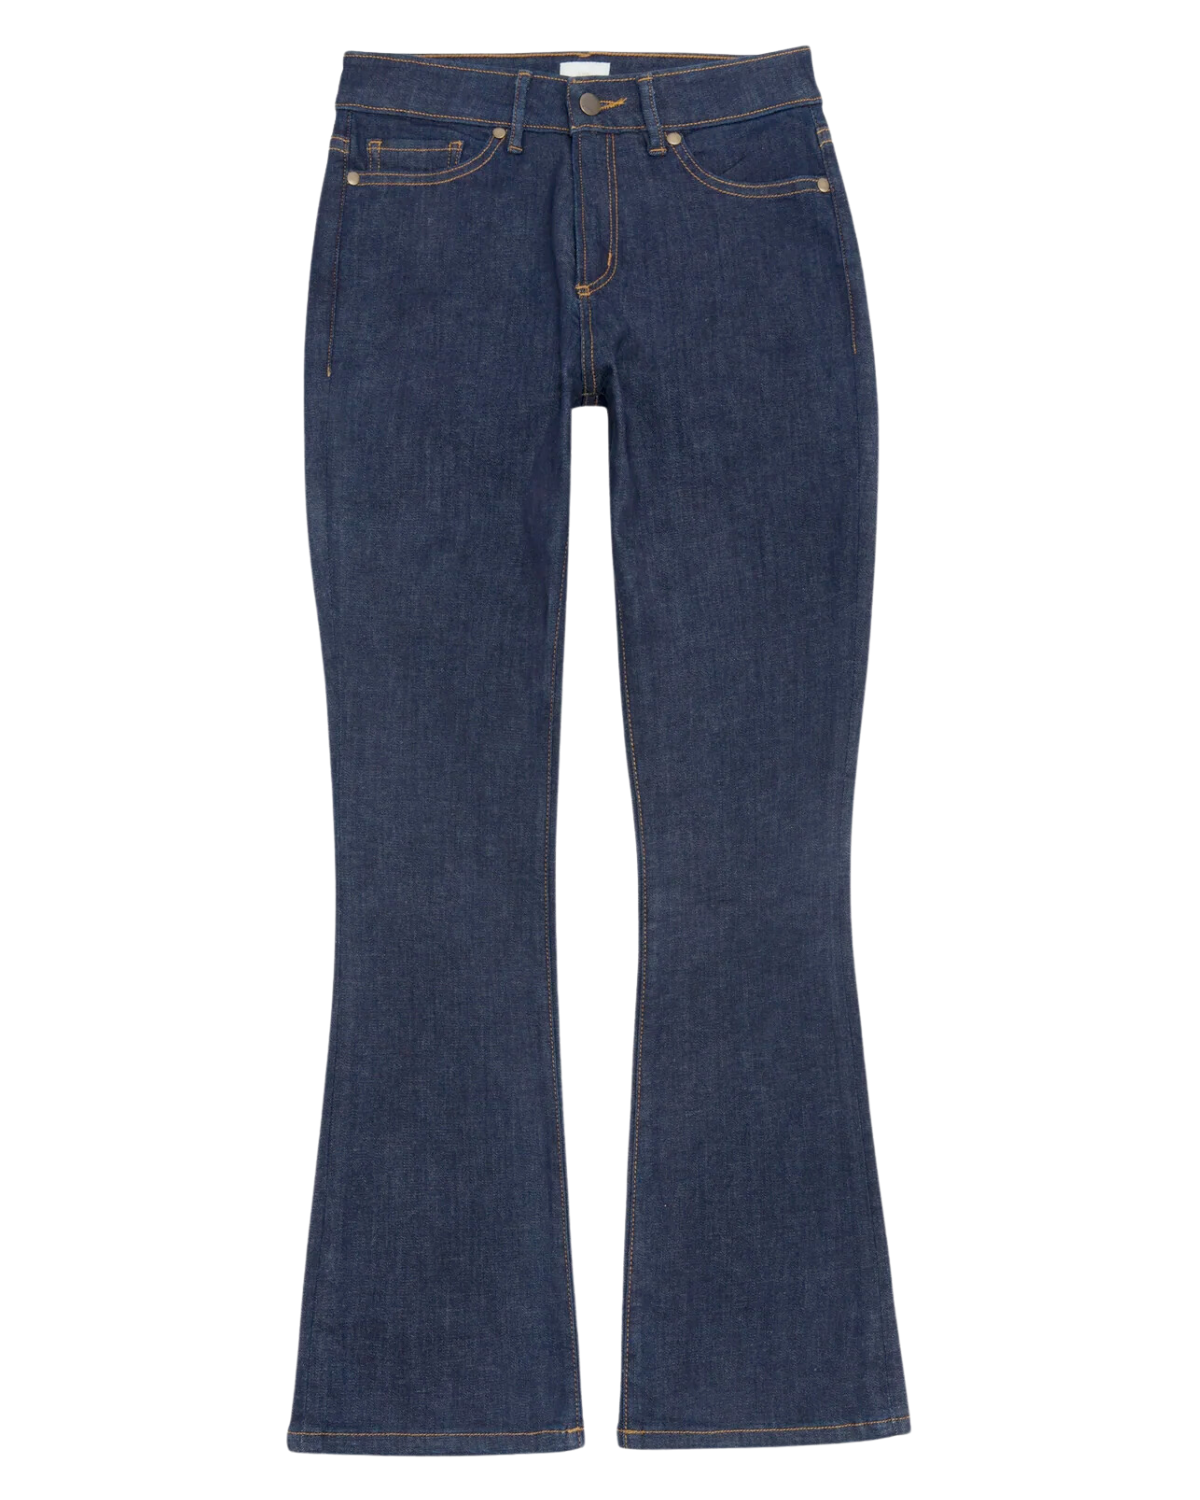 Flare Cropped 5-Pocket Jean (Indigo Stretch Denim)